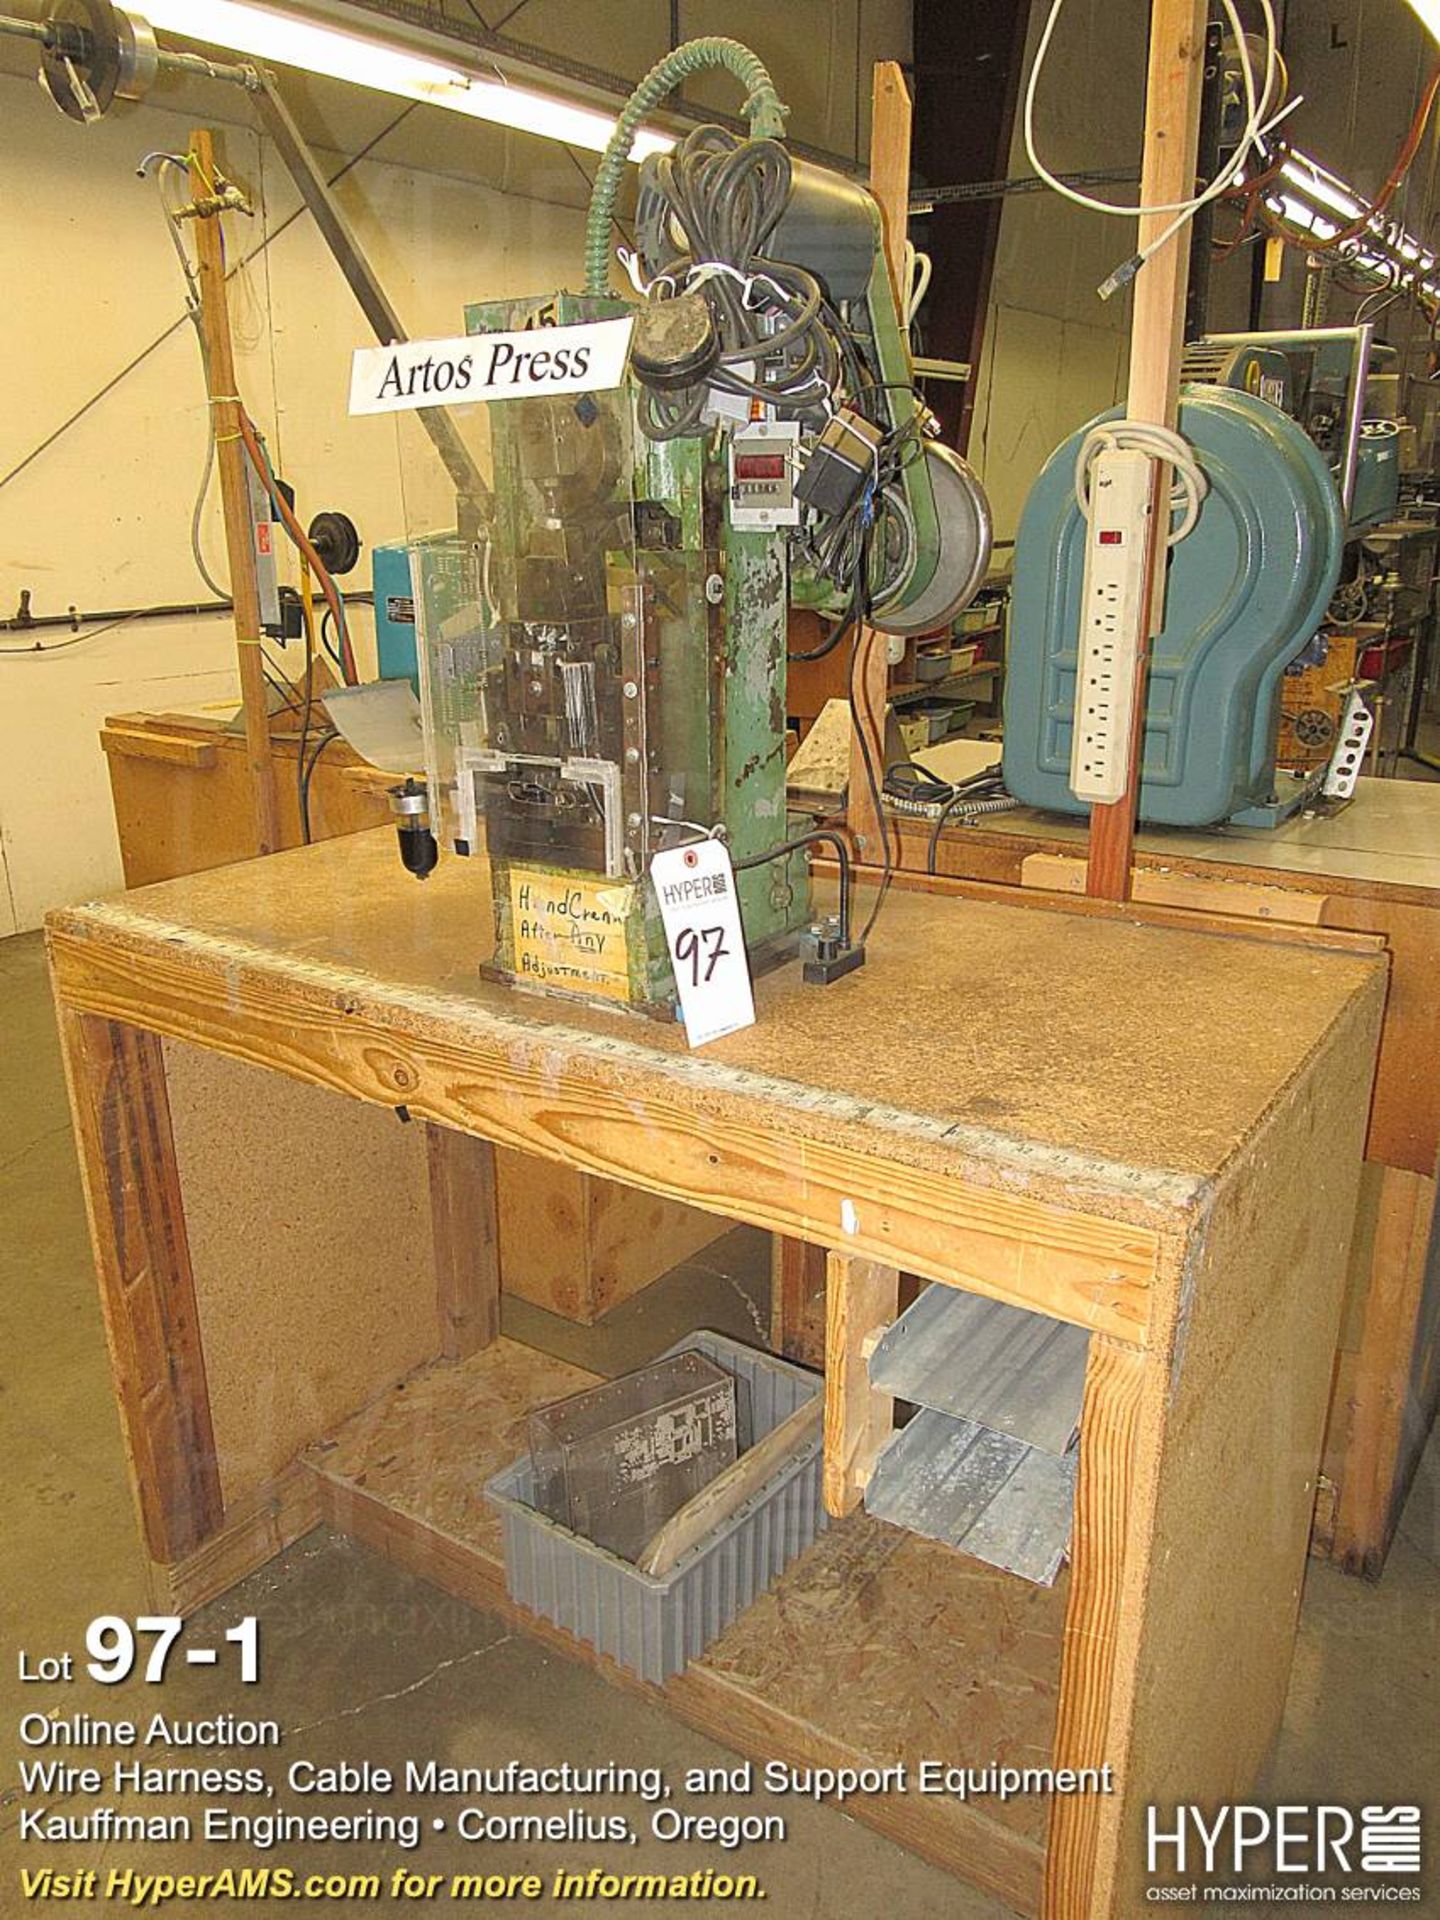 Artos model AE-675 benchtop terminating crimping press